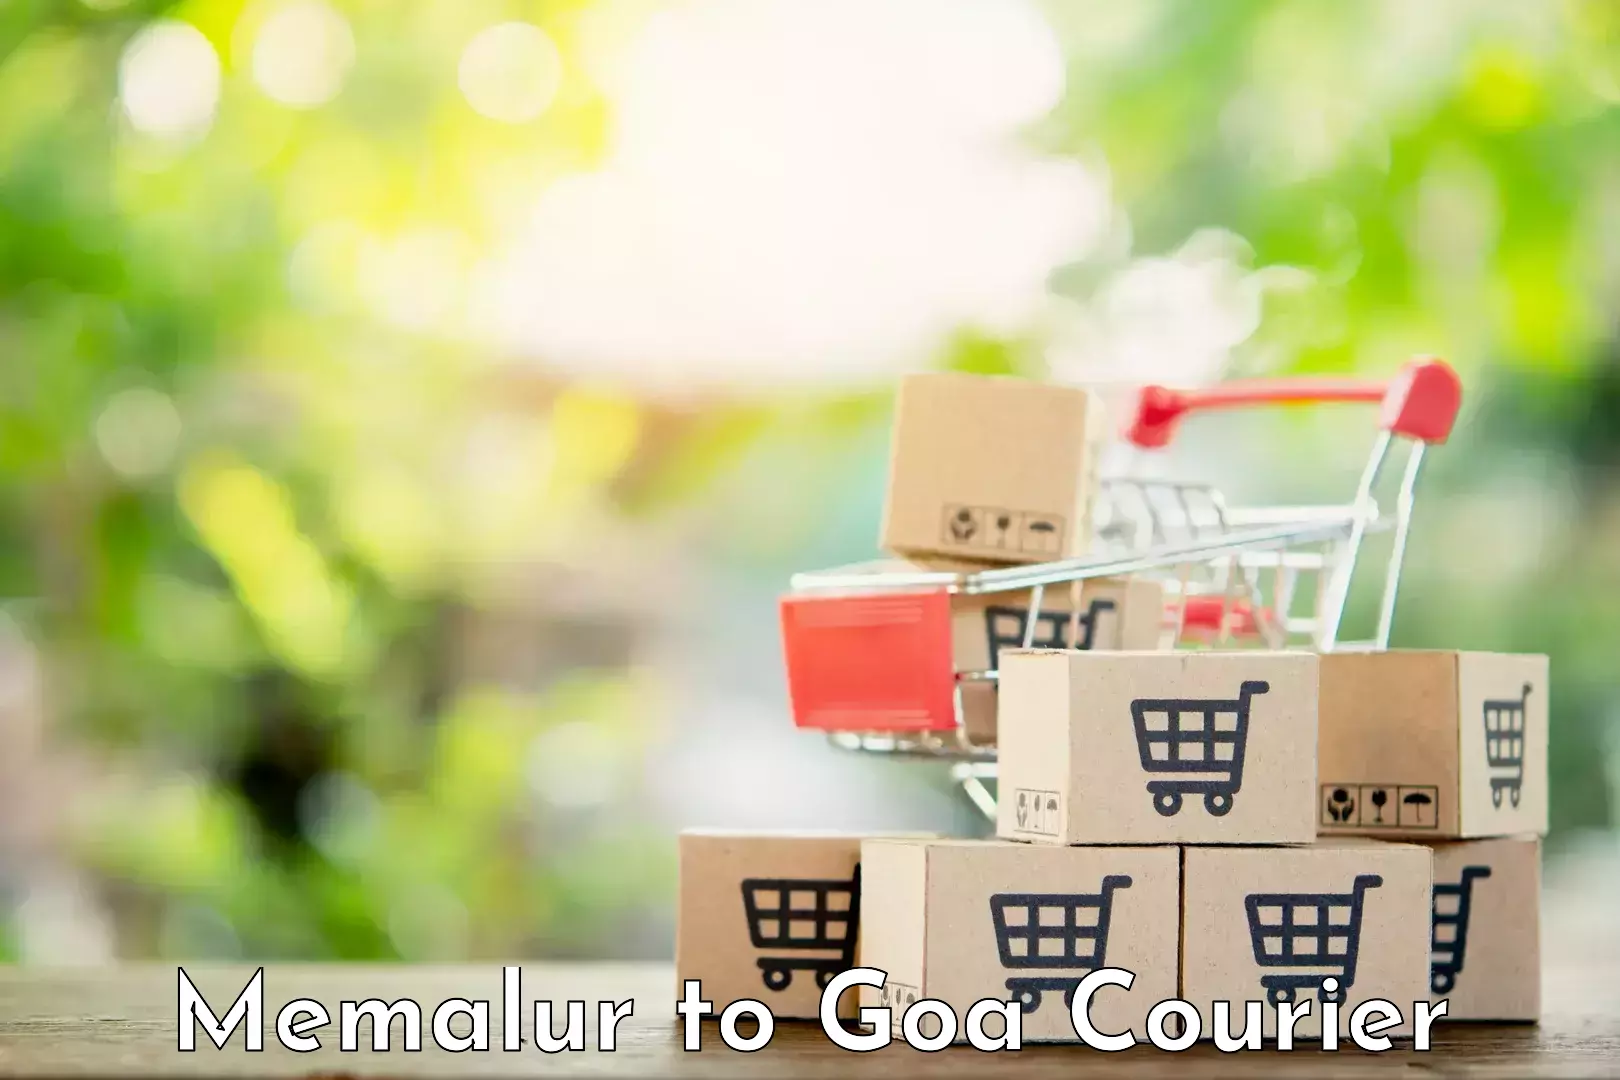 Courier service innovation Memalur to Goa University